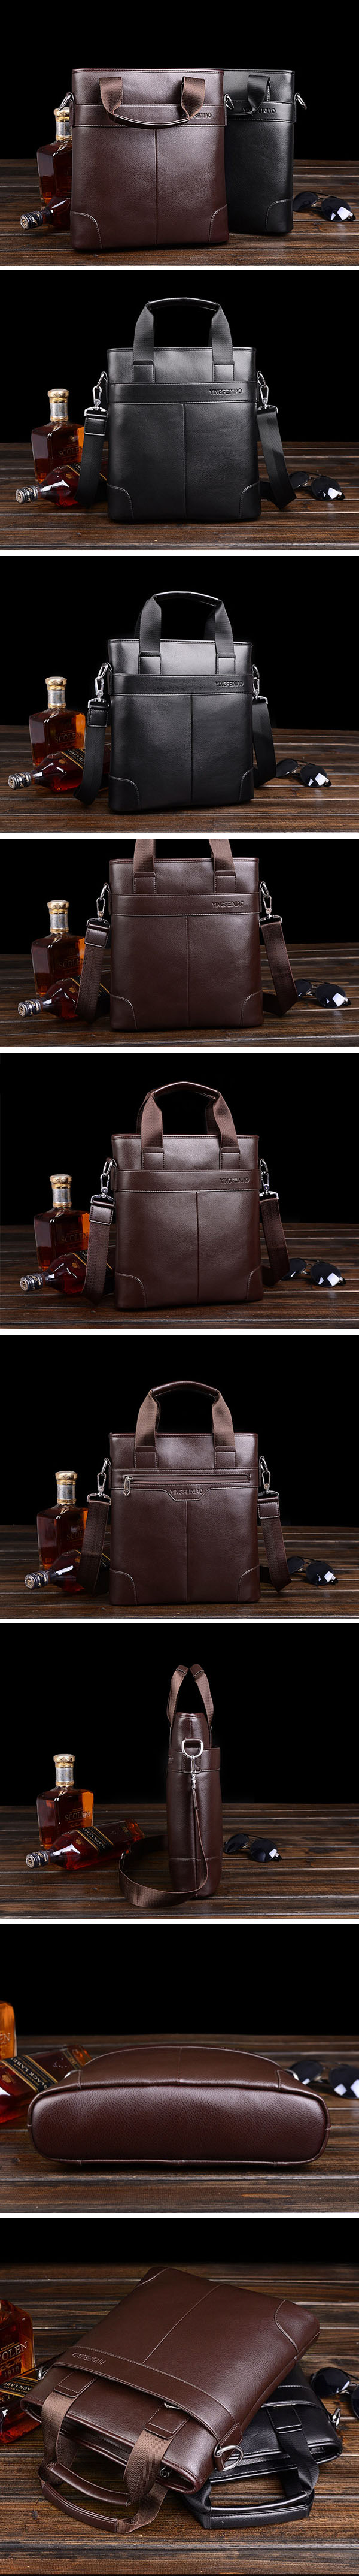 Men-PU-Business-Casual-Black-Brown-Shoulder-Crossbody-Bag-Handbag-1004615